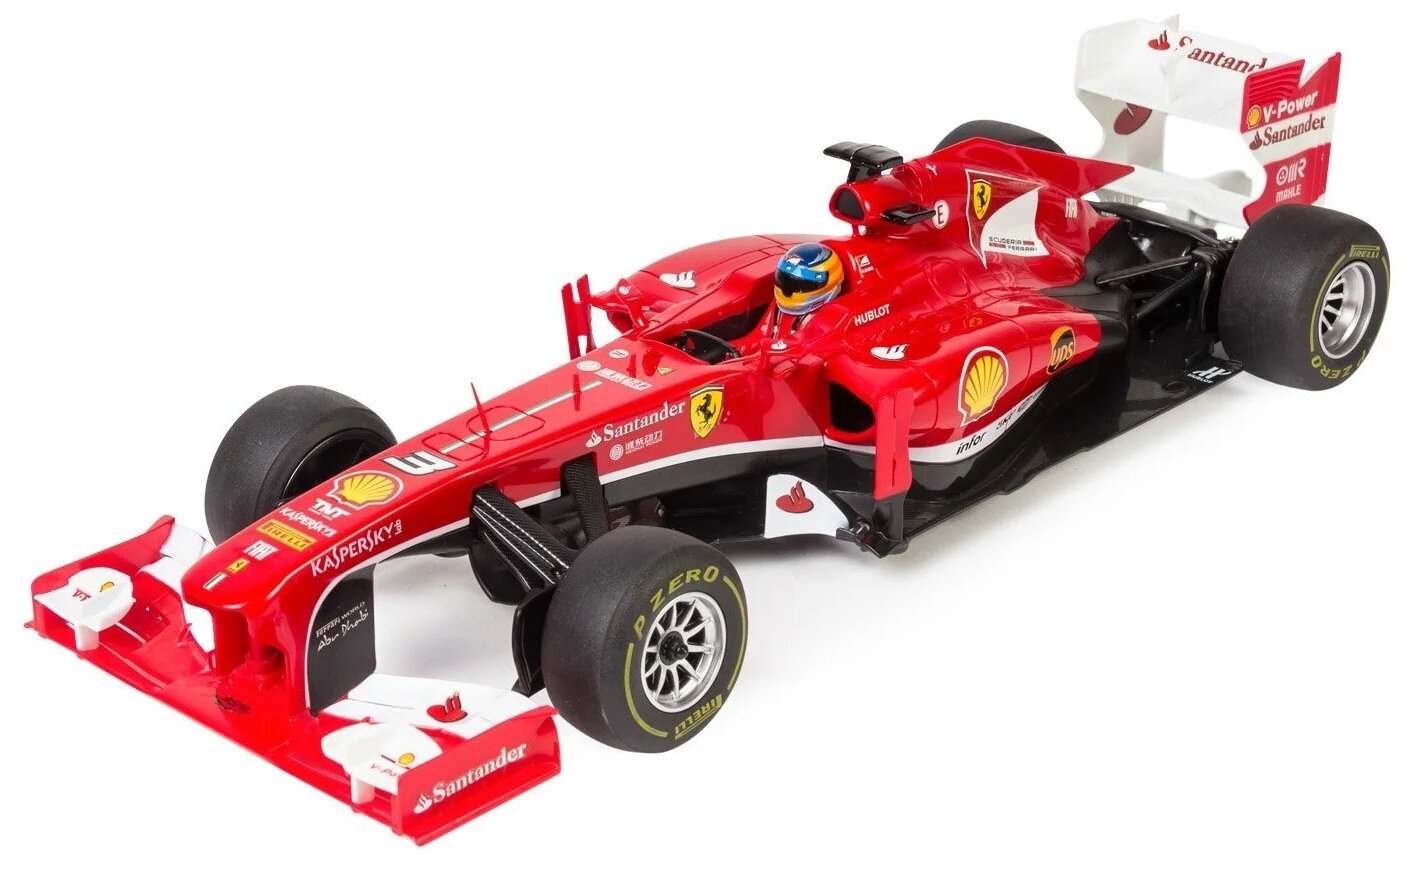 Машина Rastar РУ 1:12 Ferrari F1 Красная 57400